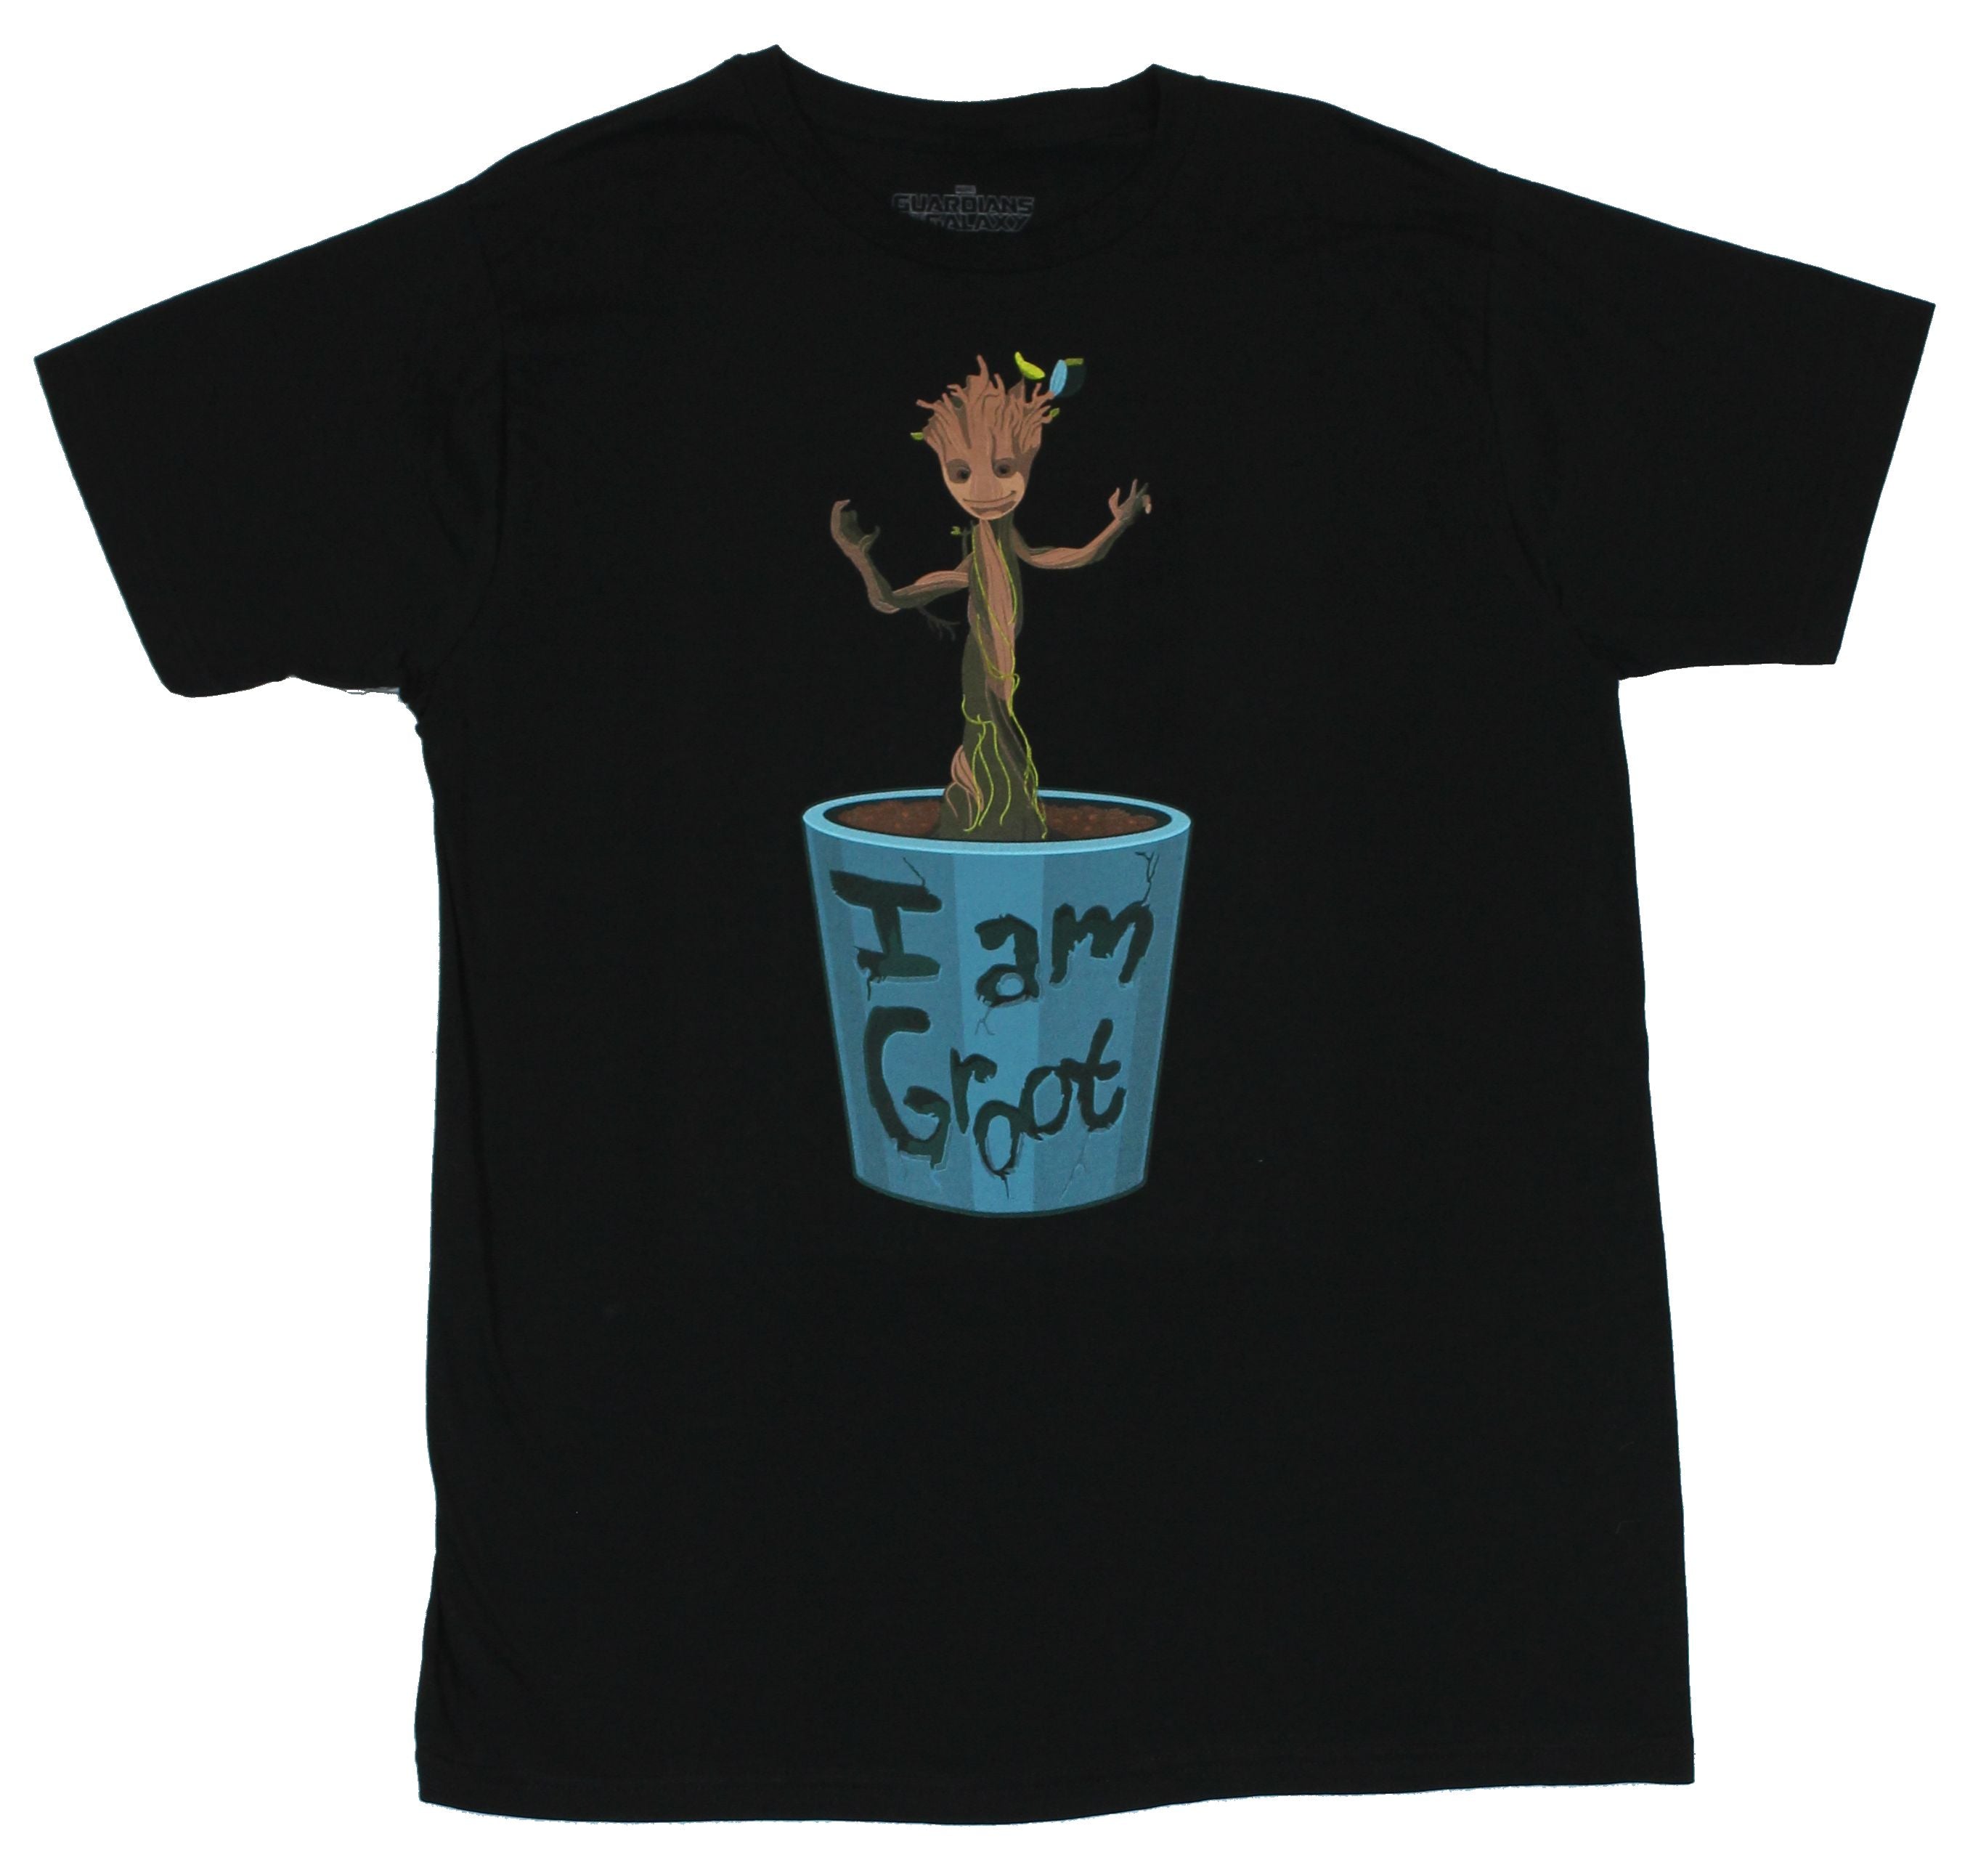 Guardians of the Galaxy Mens T-Shirt - "I Am Groot" Dancing Pot Full Color Image